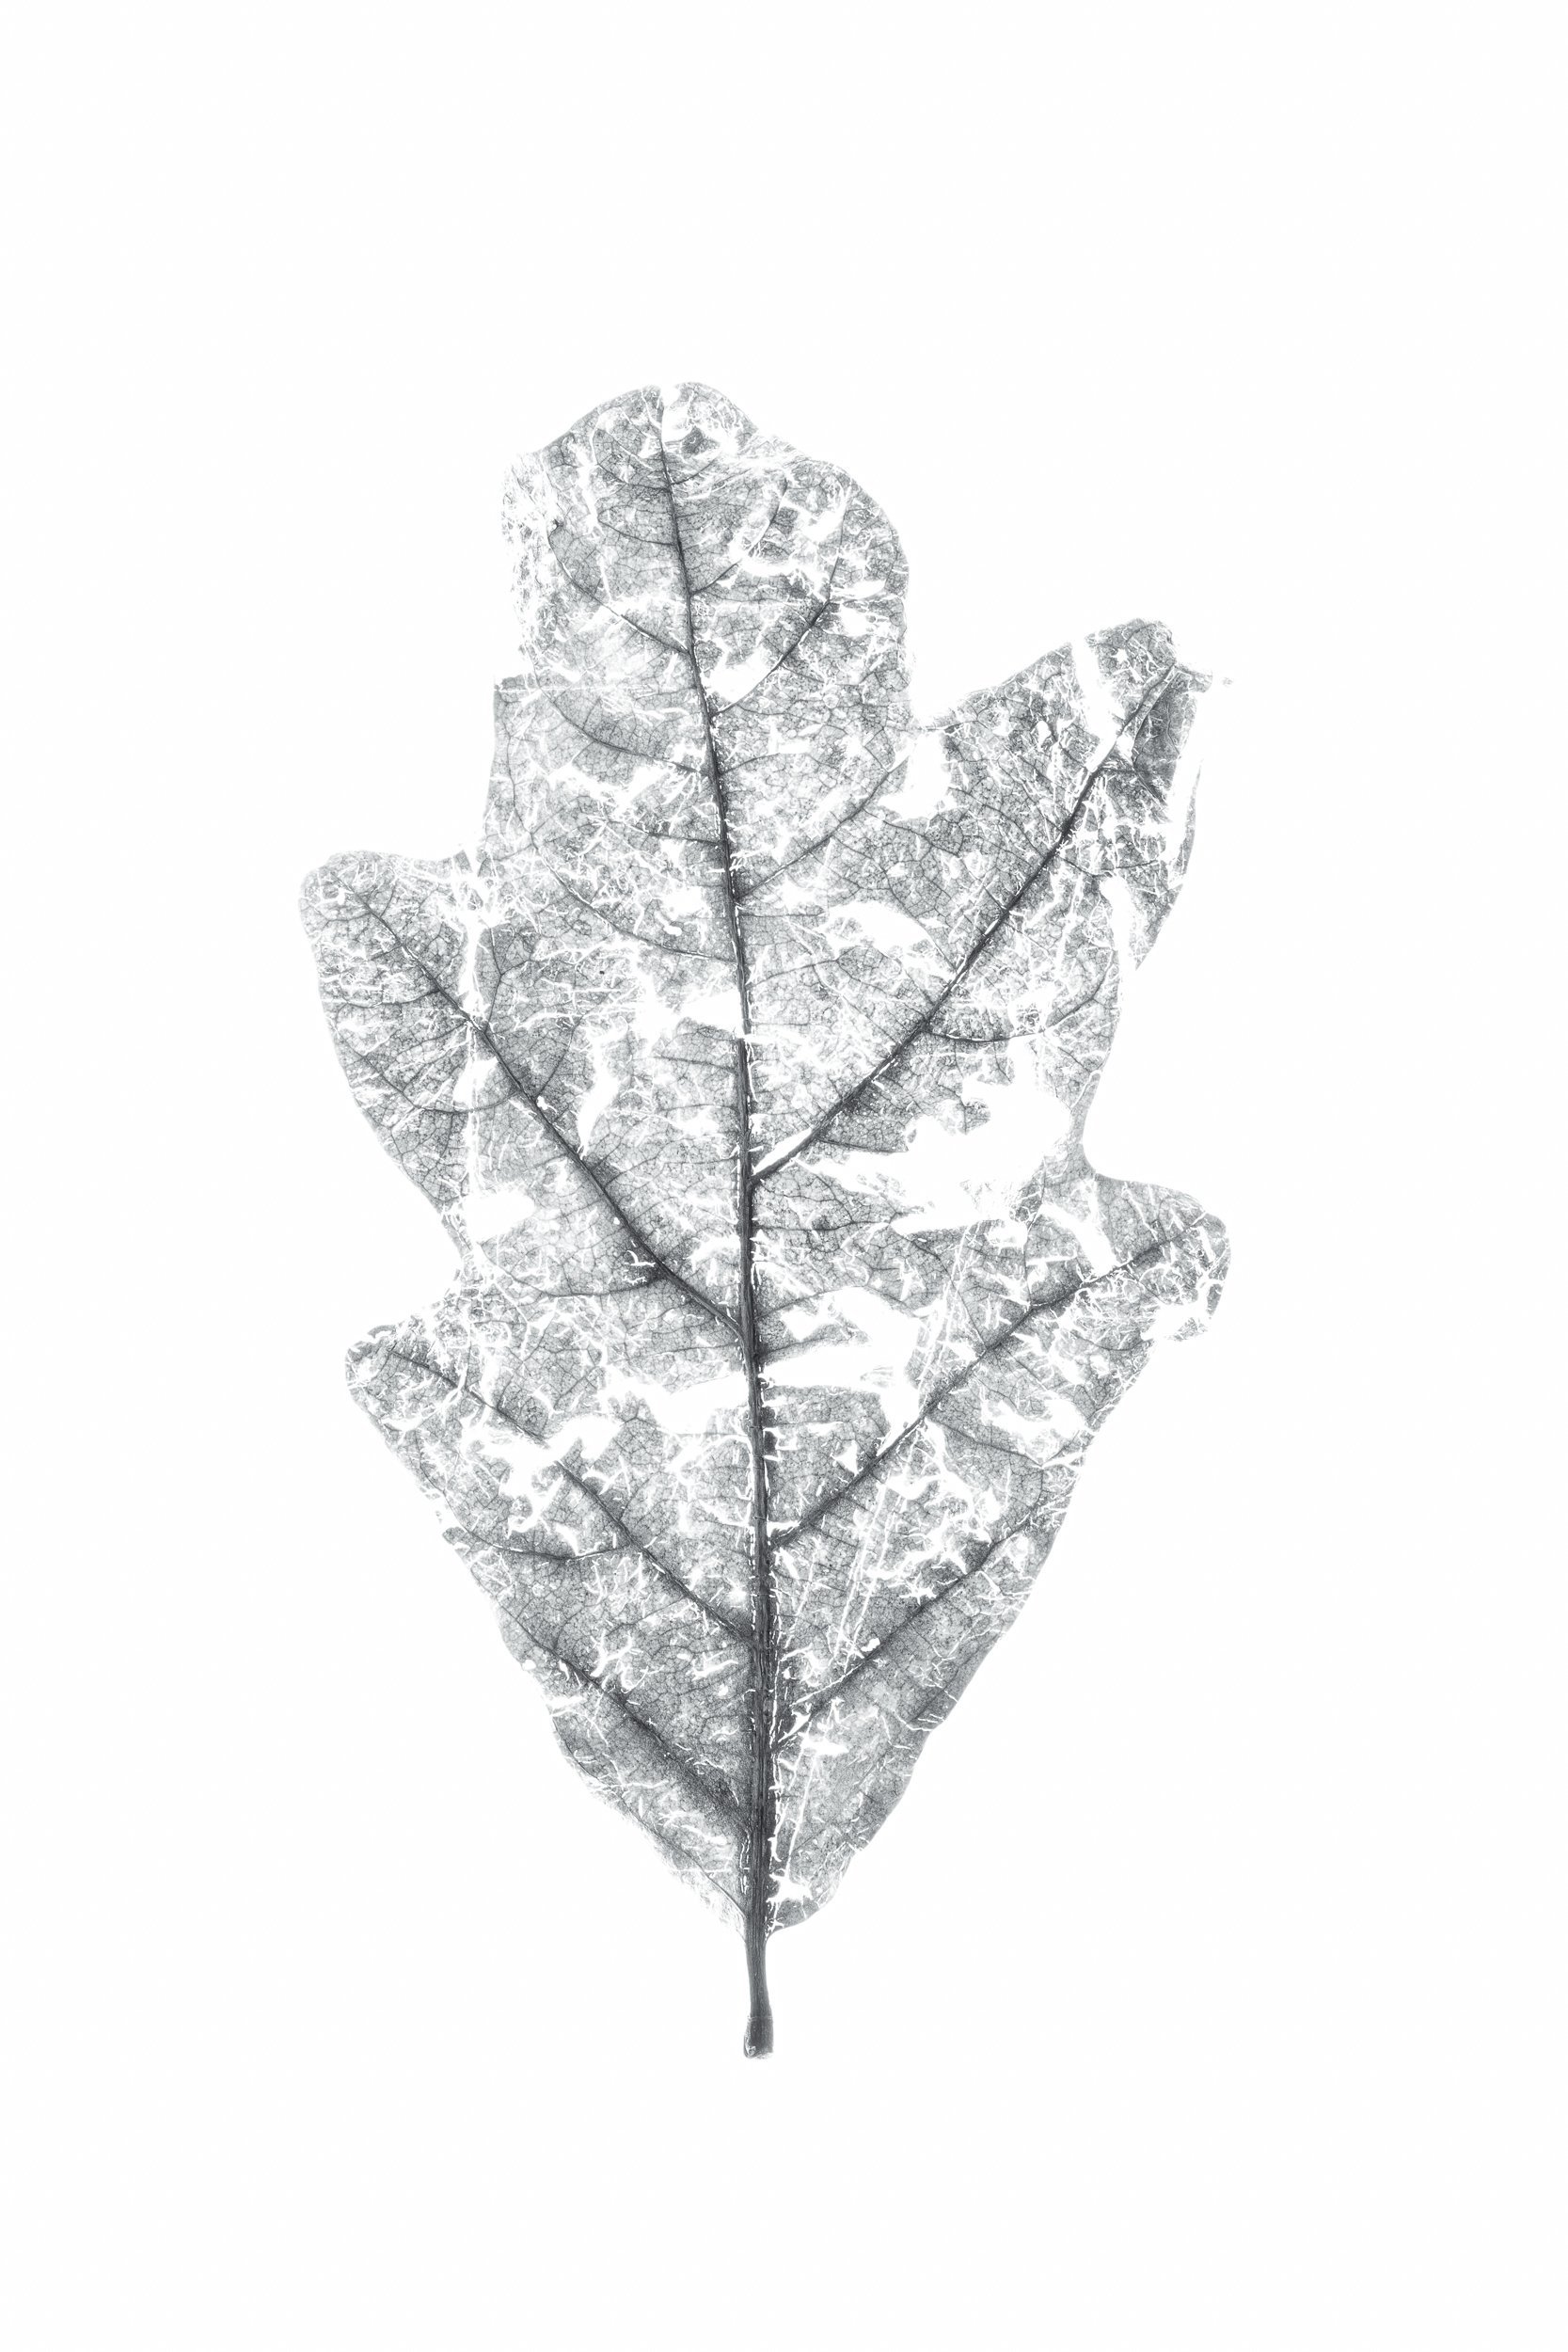 Oak Leaf Skeleton #2 | RBMk4_2410 | Robert Belas Photography